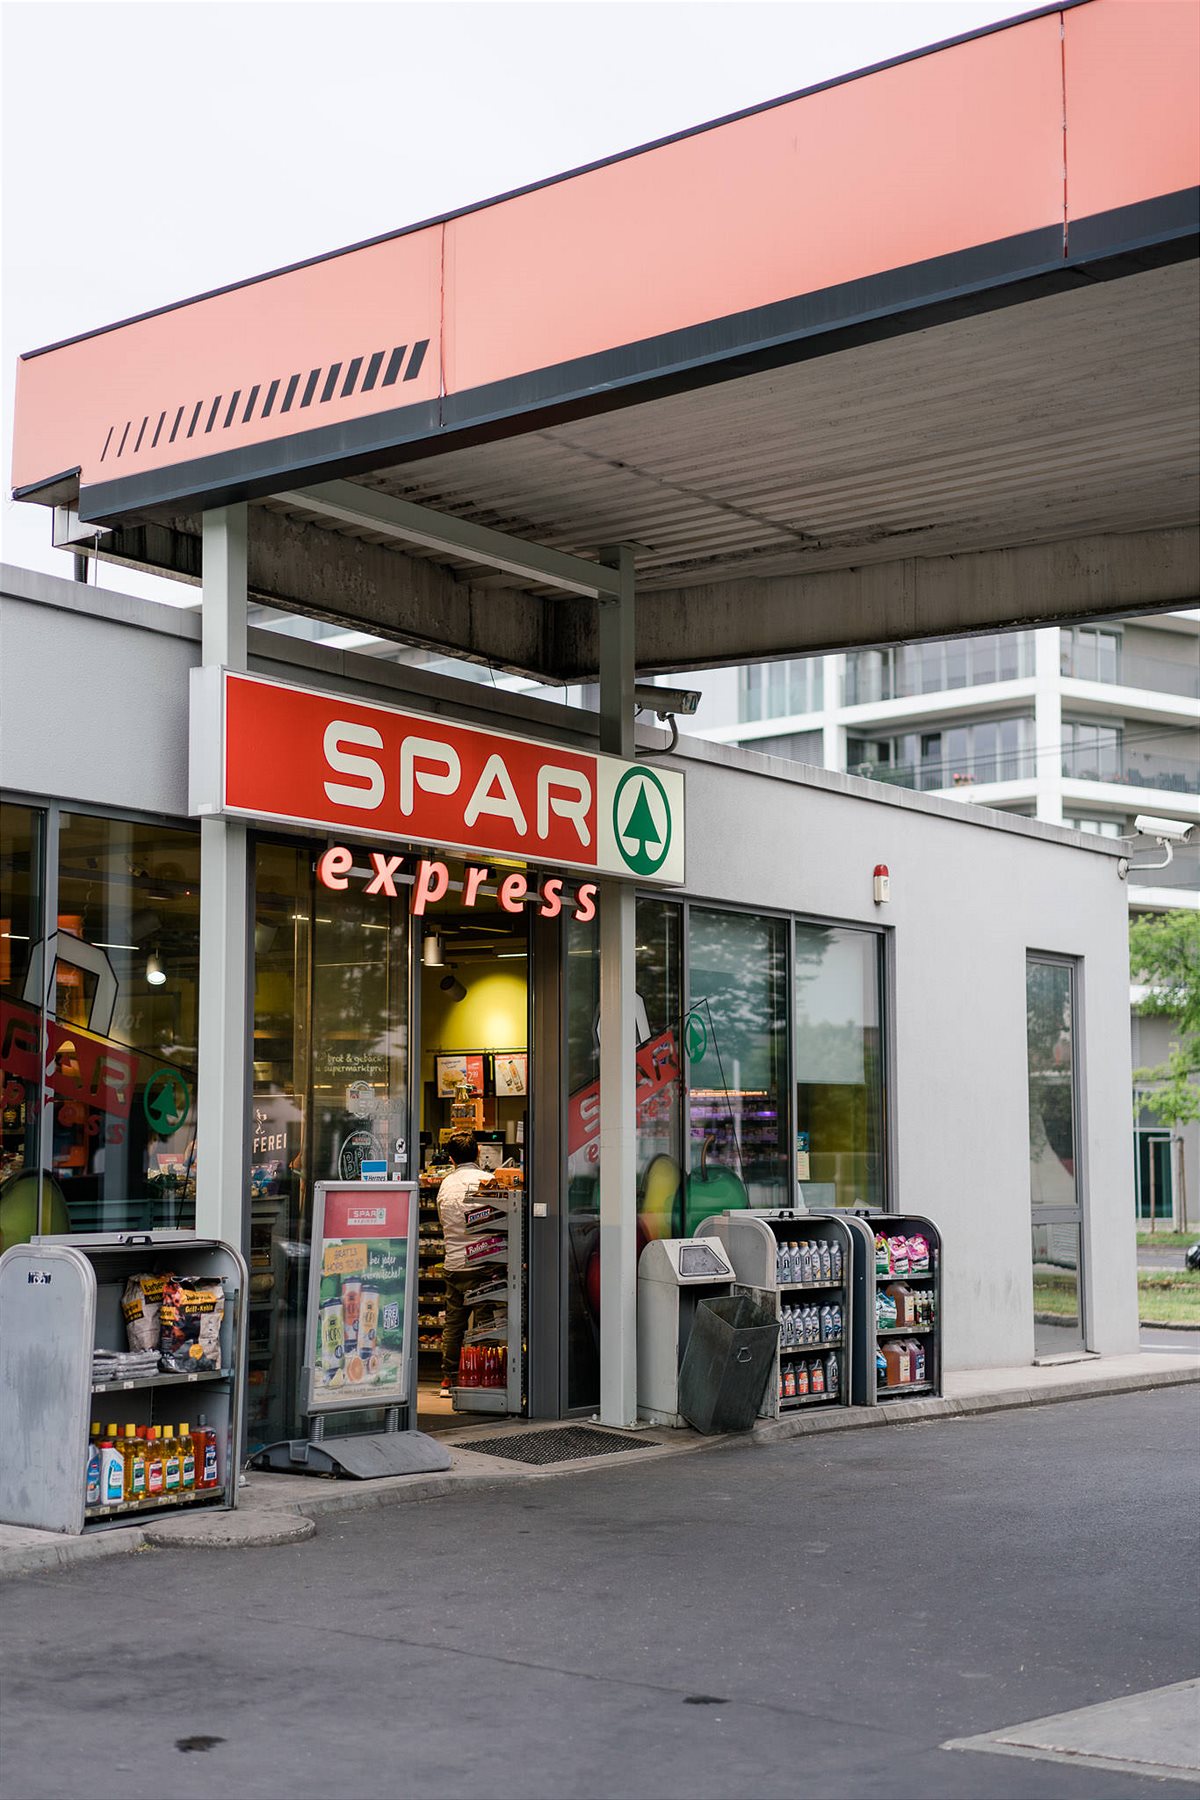 Doppler eröffnet 67. Spar express Shop in Bad Ischl